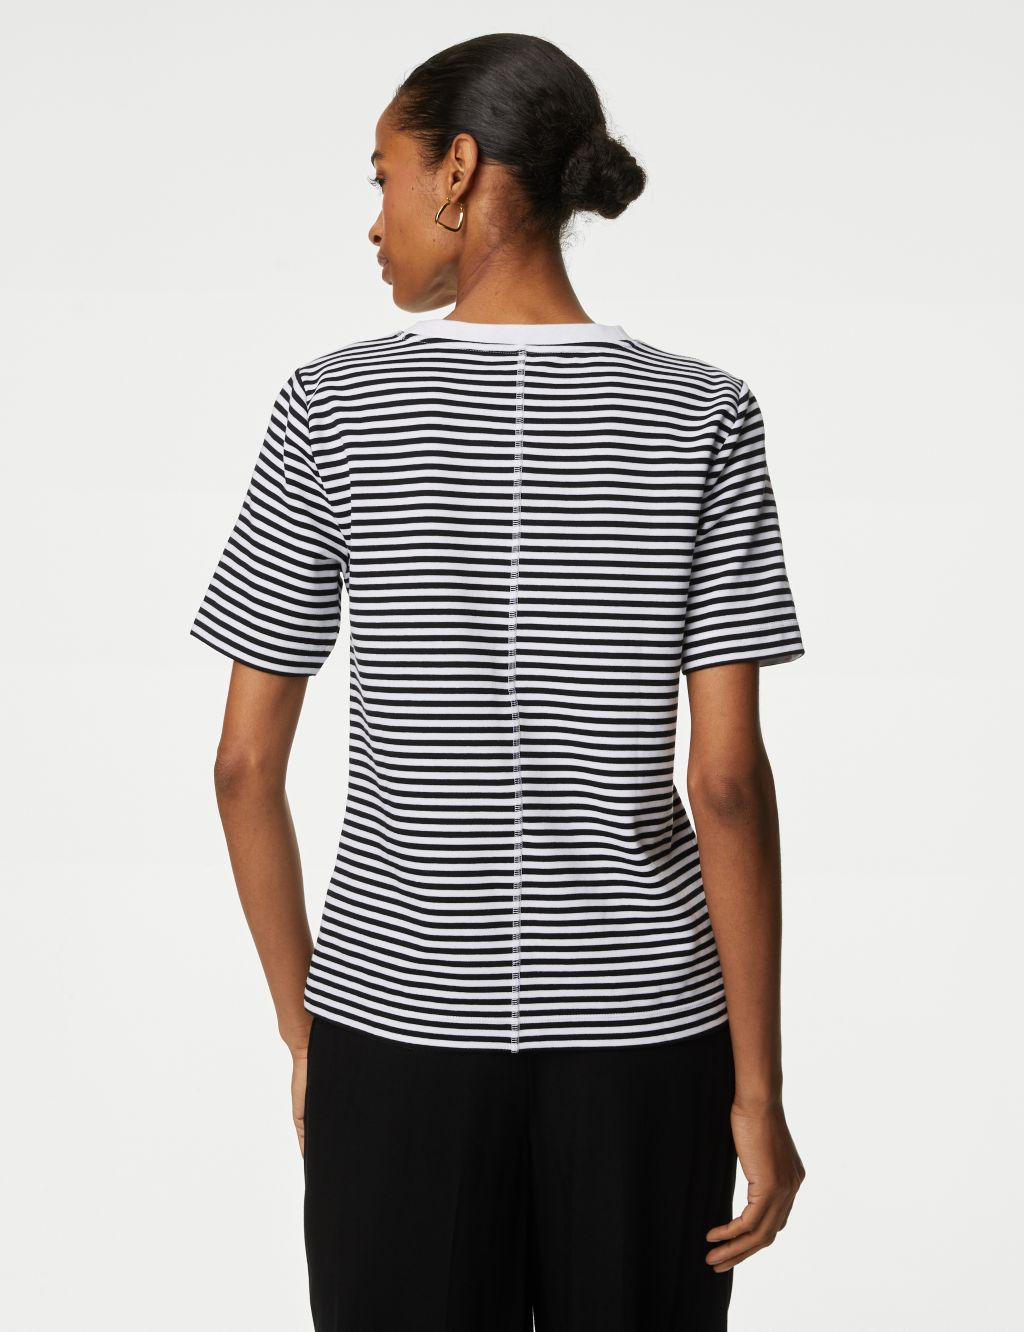 Cotton Rich Striped T-Shirt image 5